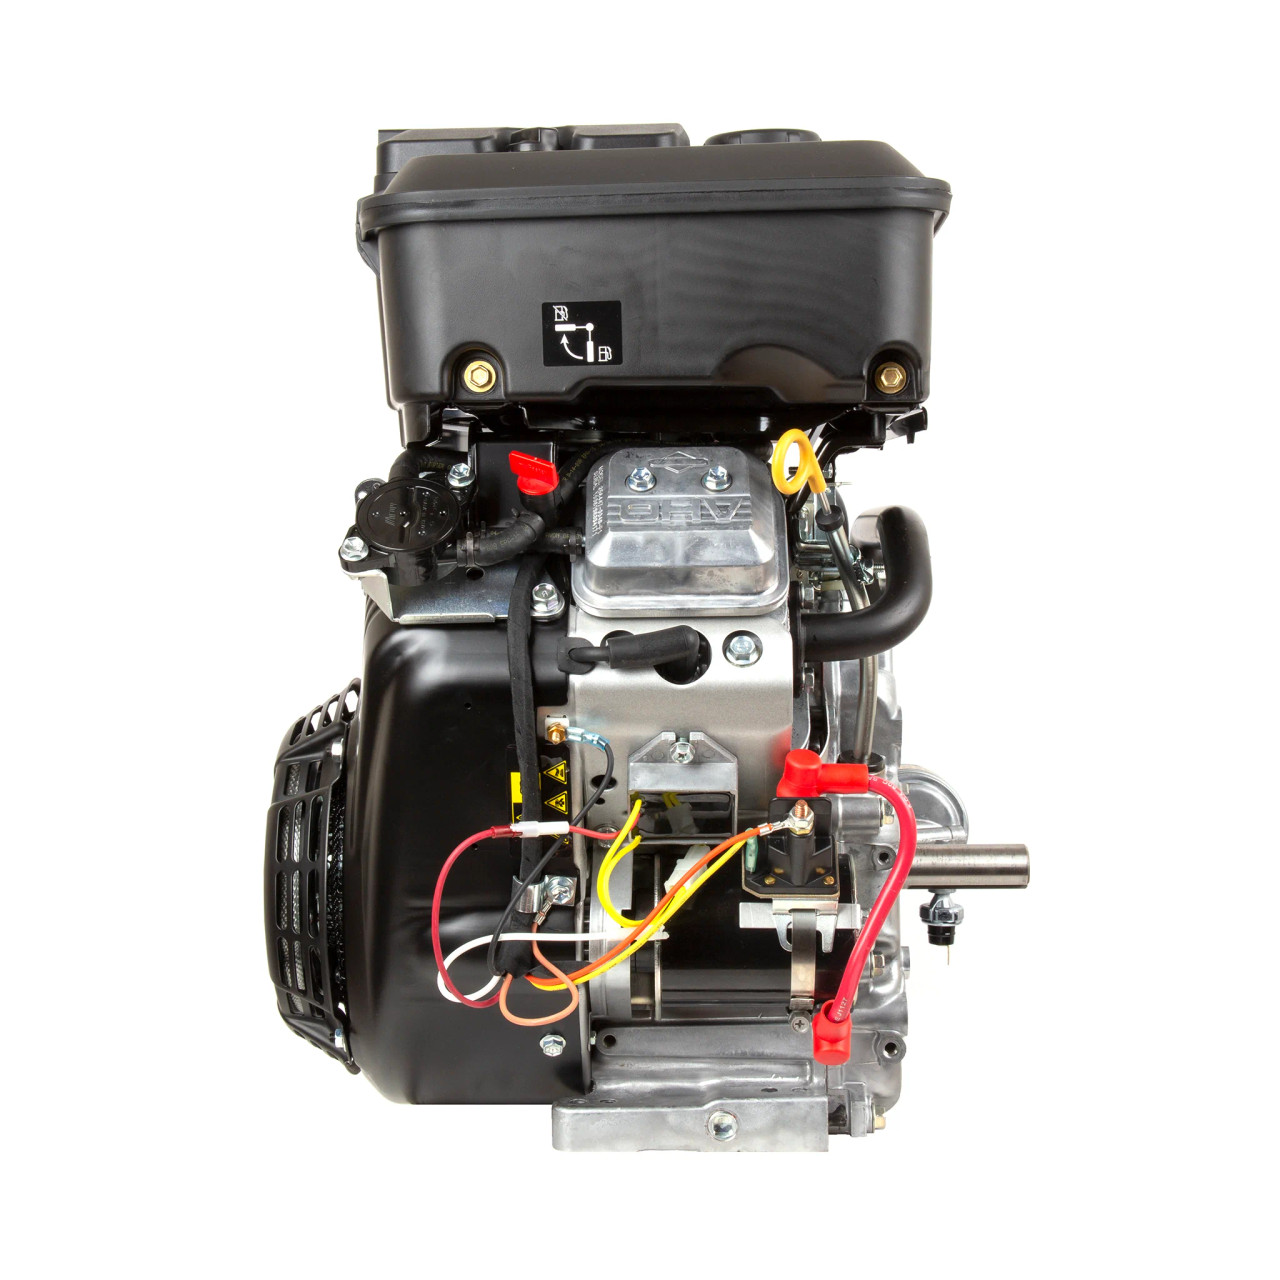 Vanguard 18.0 HP 570cc Horizontal Shaft Engine 356447-0049-F1